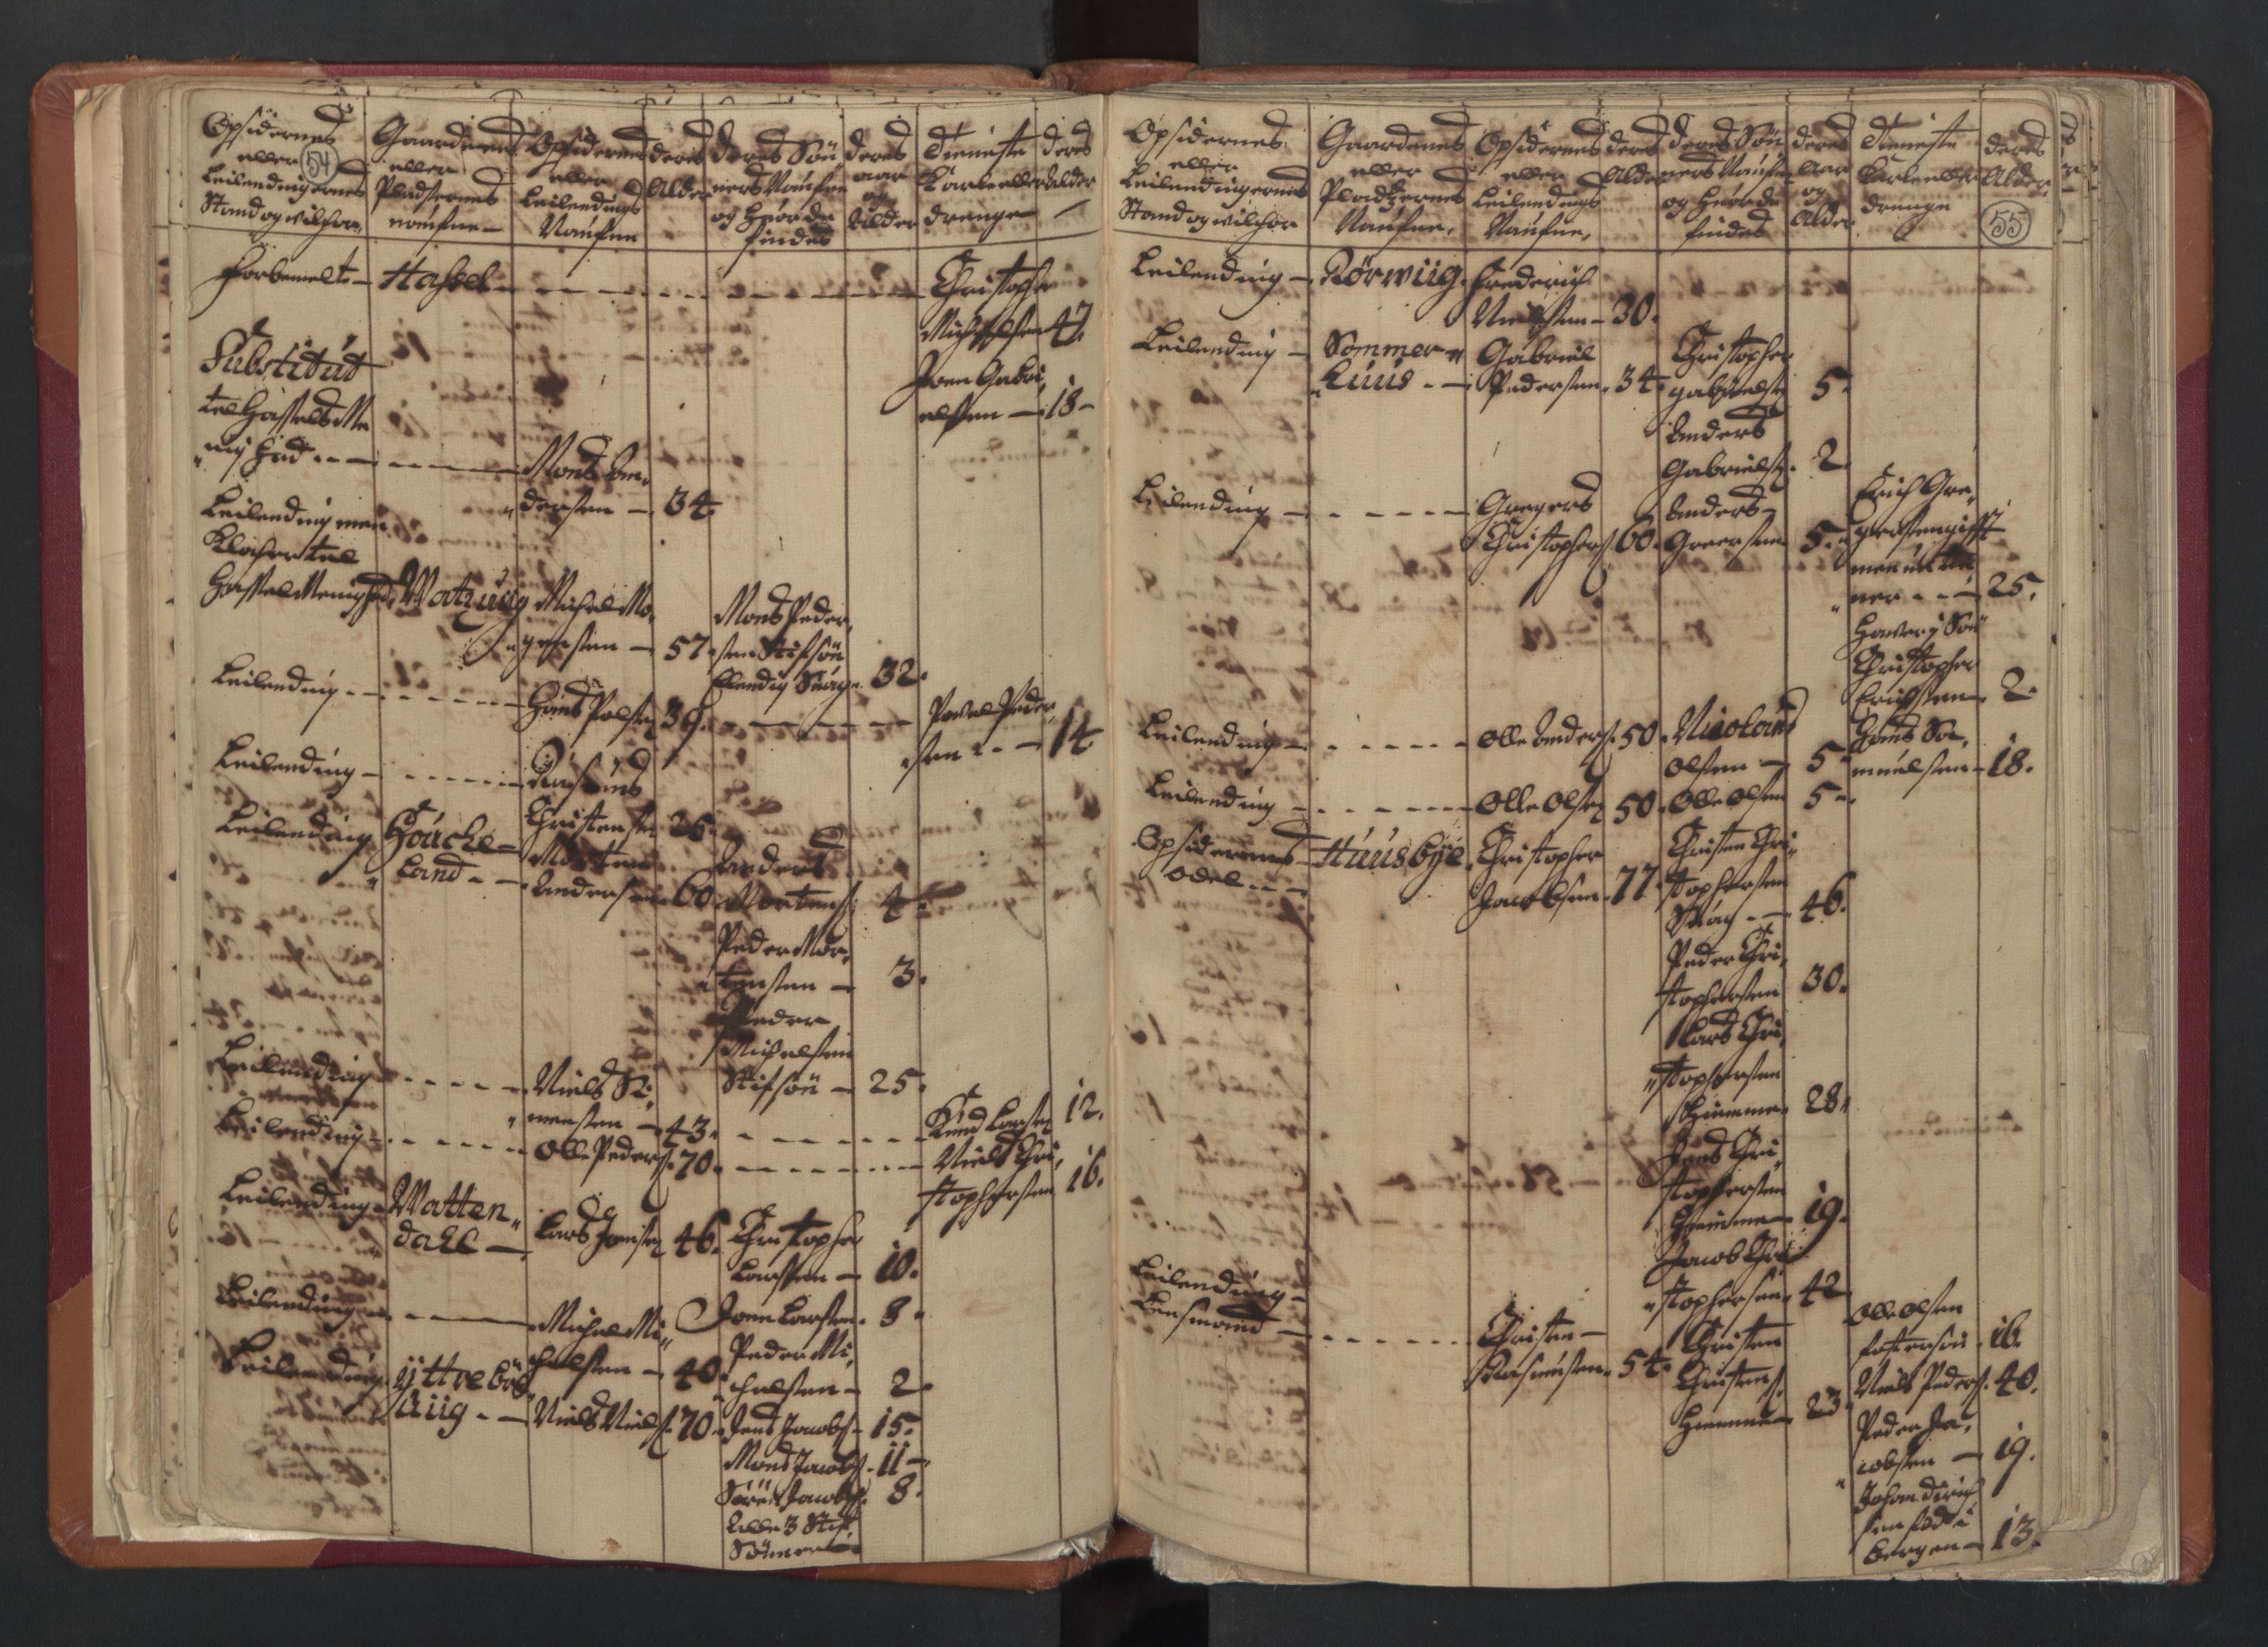 RA, Manntallet 1701, nr. 18: Vesterålen, Andenes og Lofoten fogderi, 1701, s. 54-55